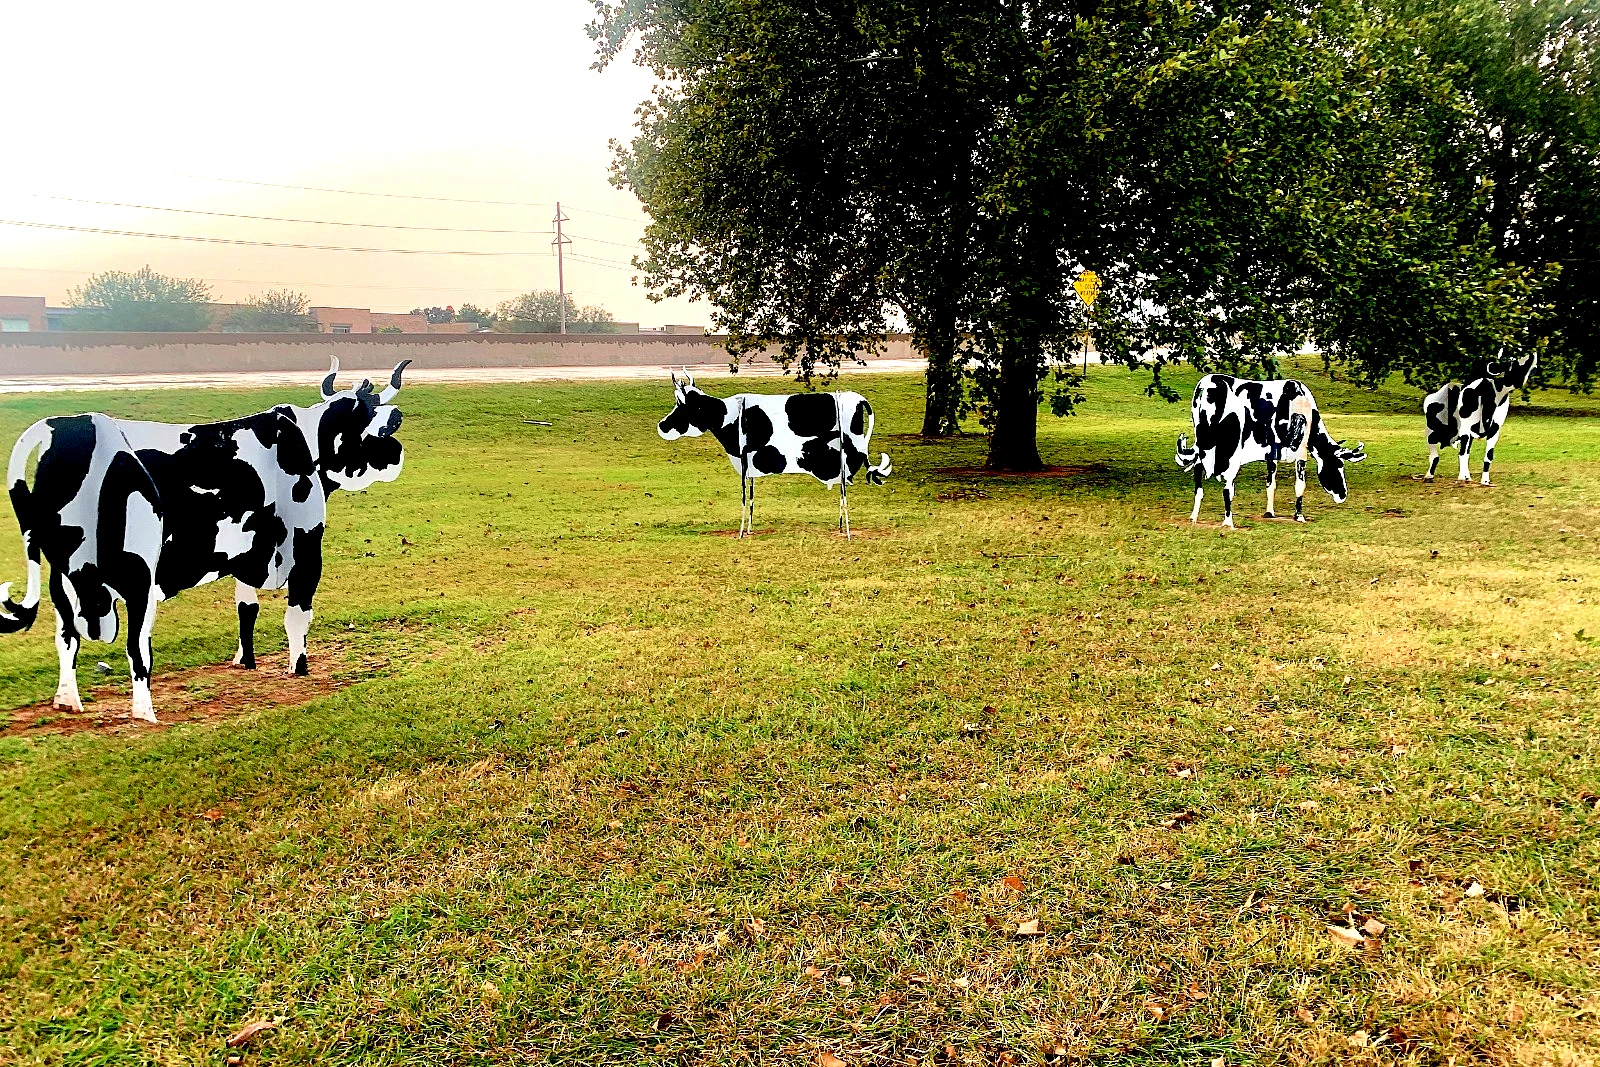 Dallas artist creates life-sized cow with Louis Vuitton logo